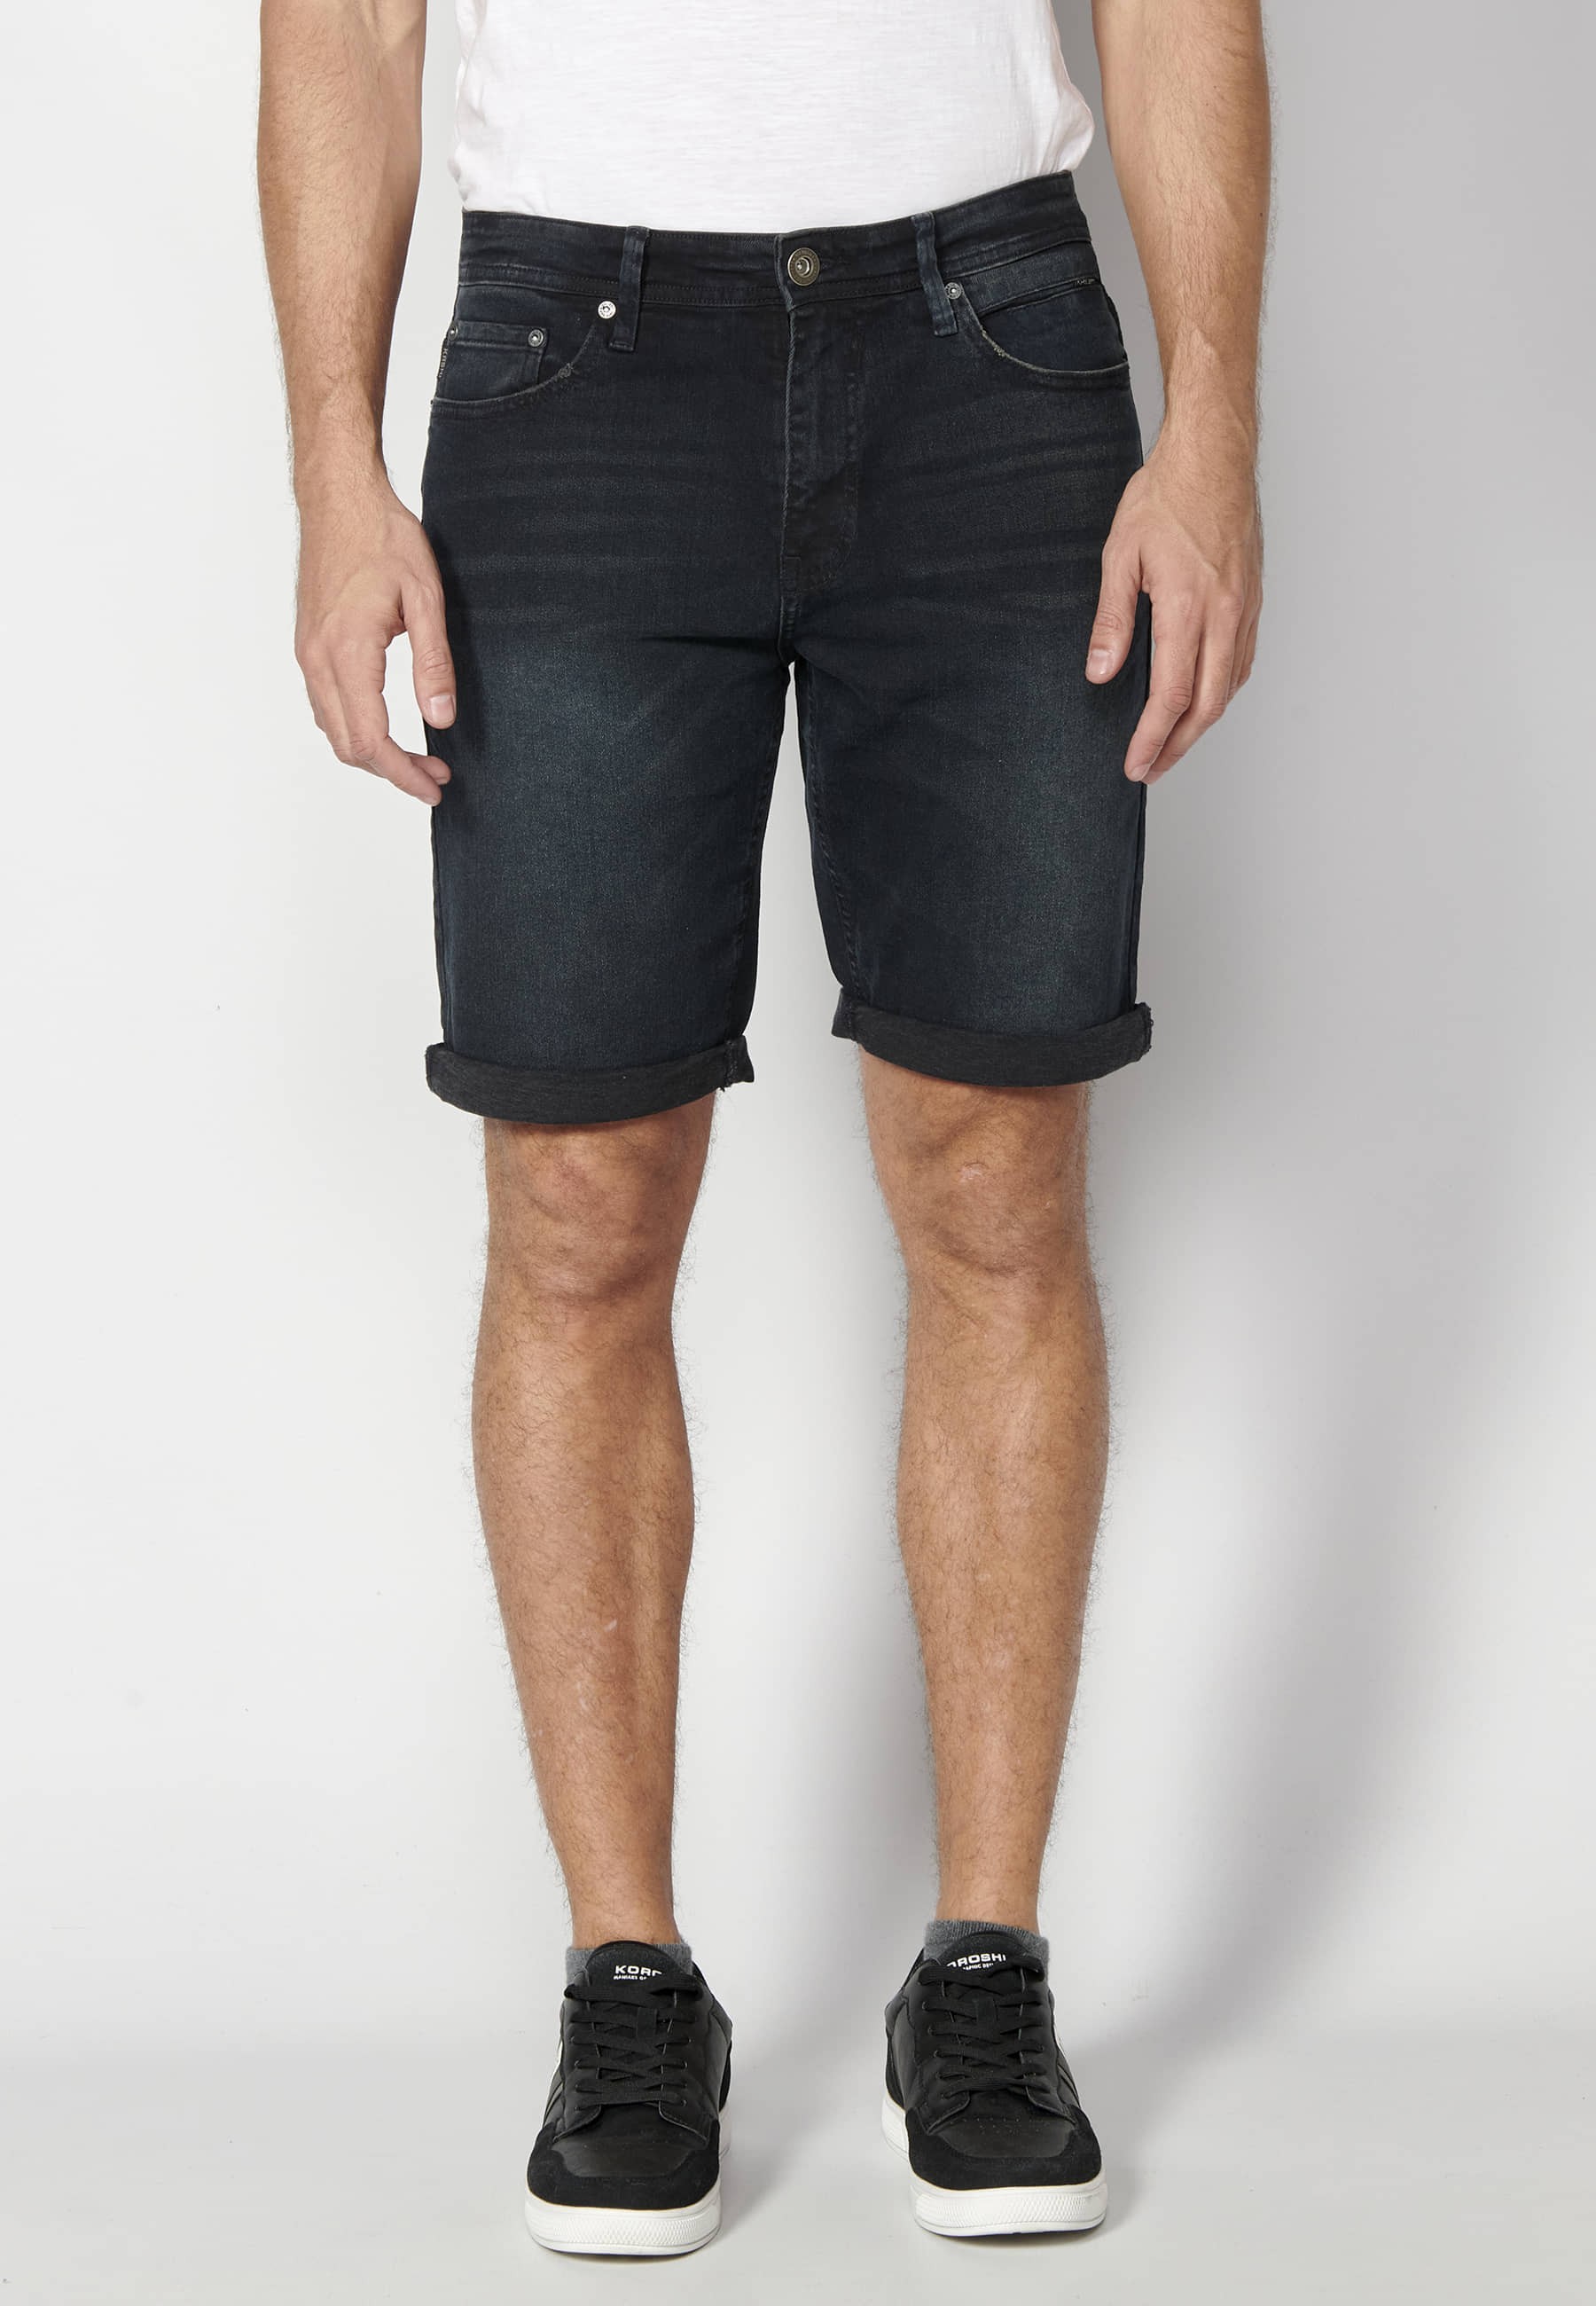 Dunkelblaue Bermuda-Shorts in normaler Passform für Herren